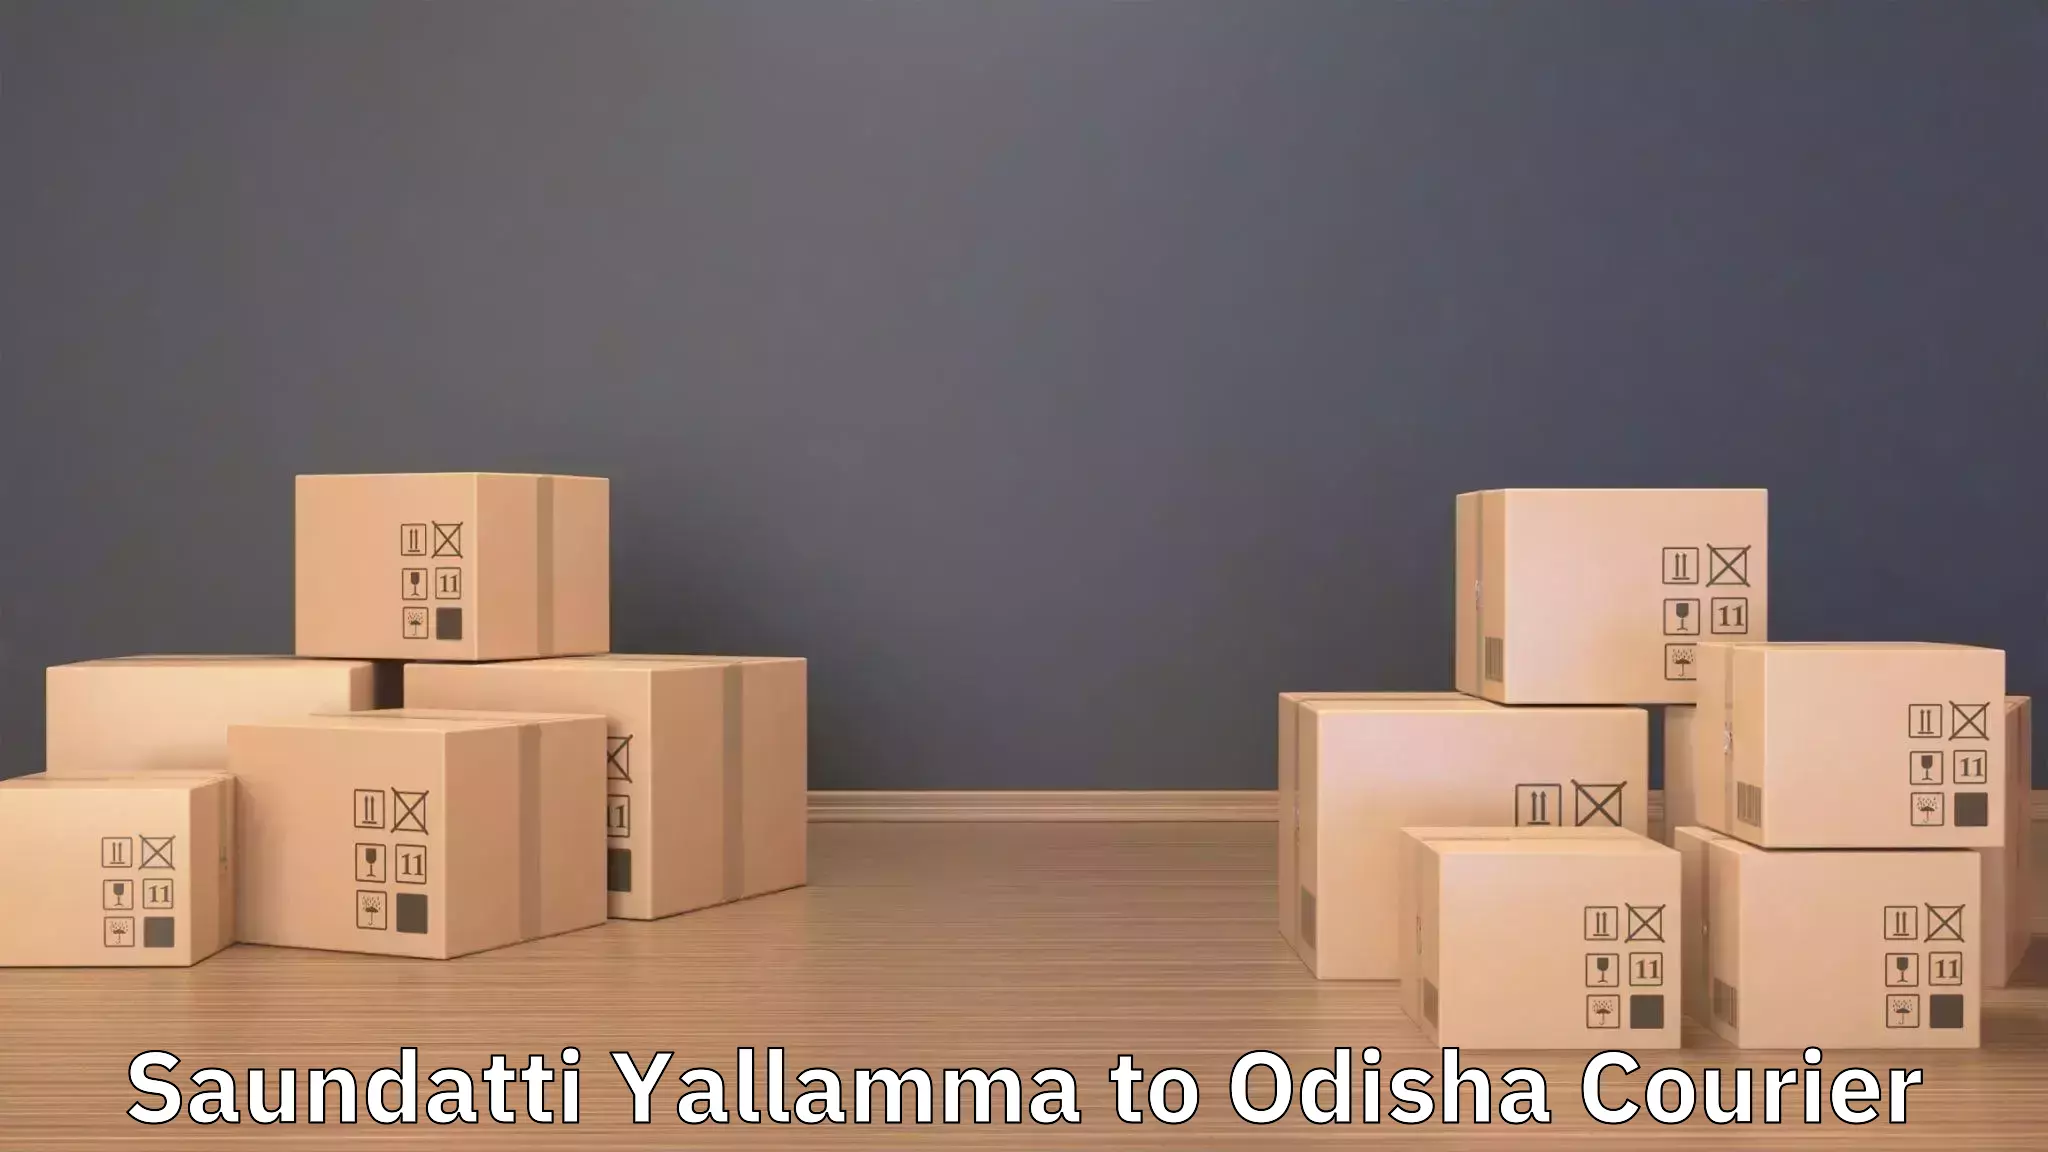 Efficient moving company in Saundatti Yallamma to Asika